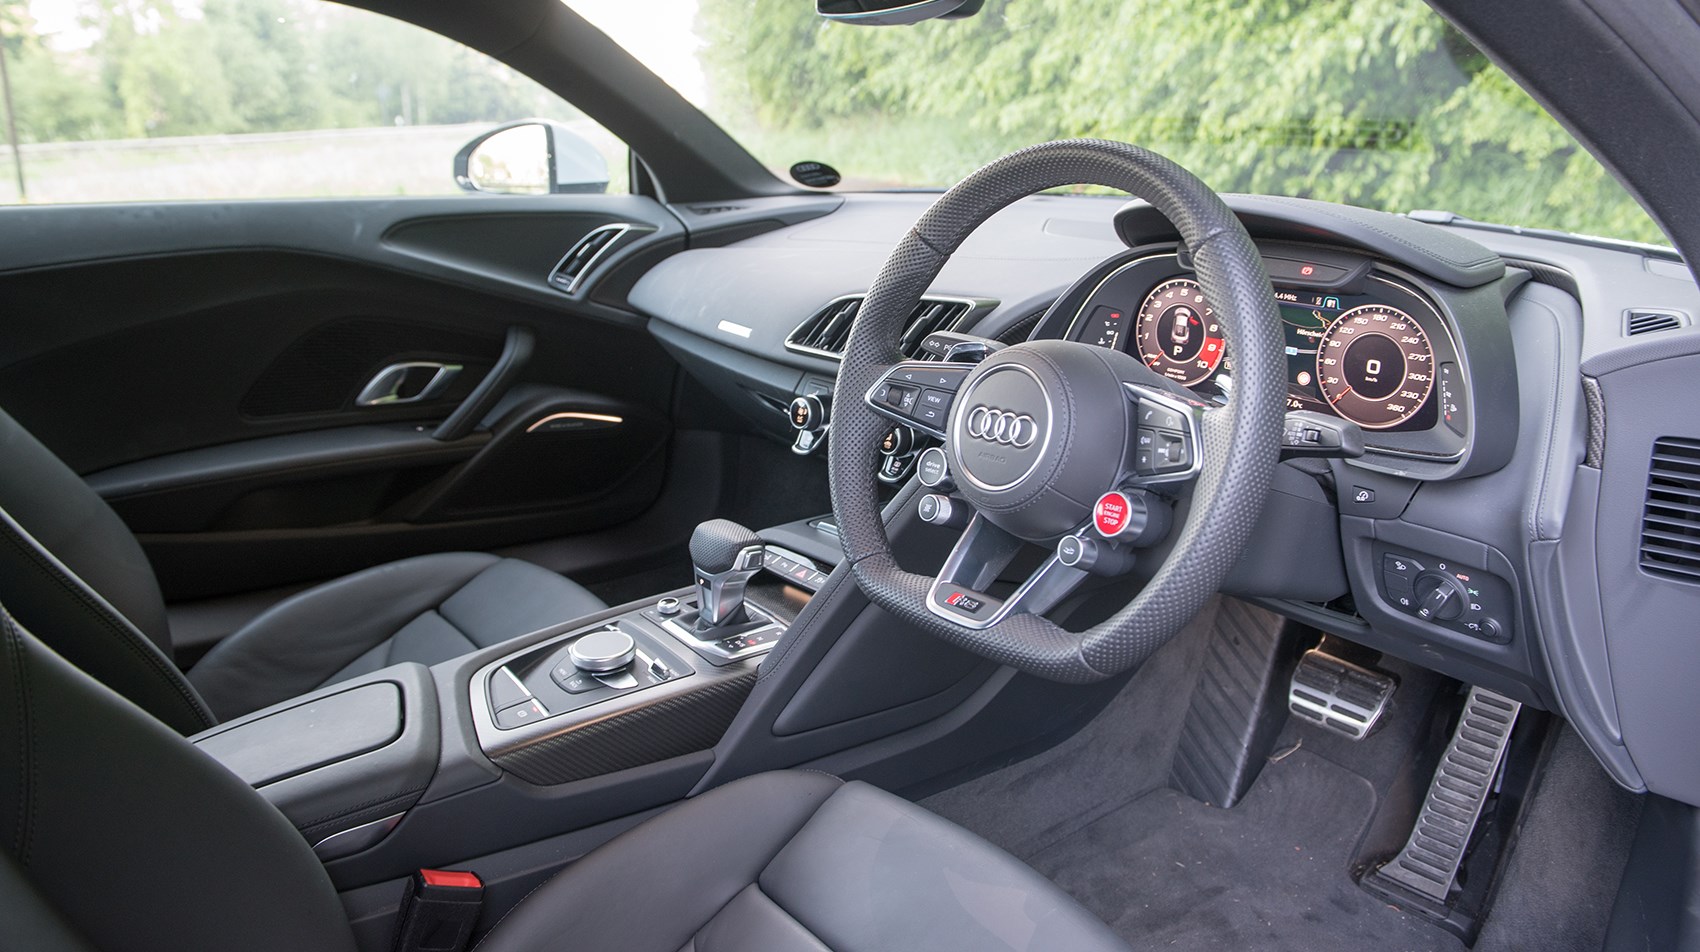 Audi R8 V10 Coupe